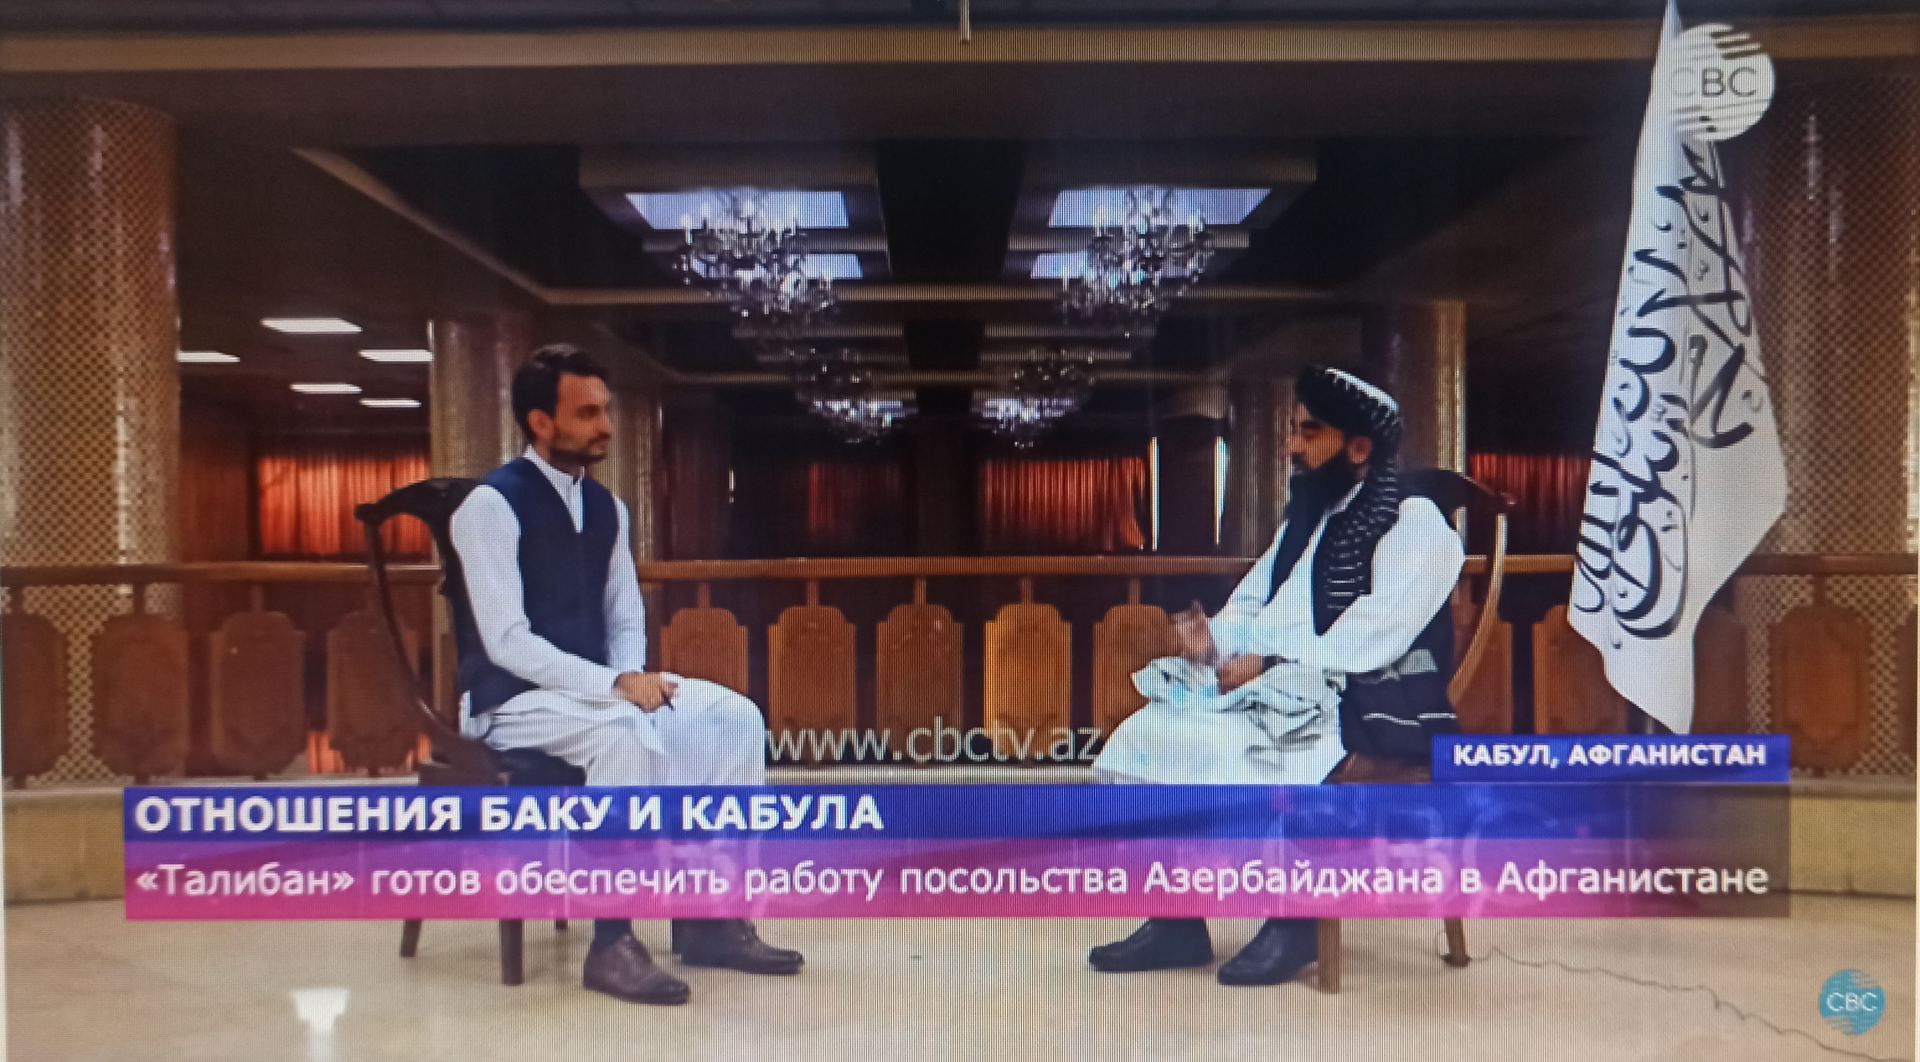 “Islamic Emirate of Afghanistan” supports Azerbaijan in Karabakh issue - spokesman (VIDEO)